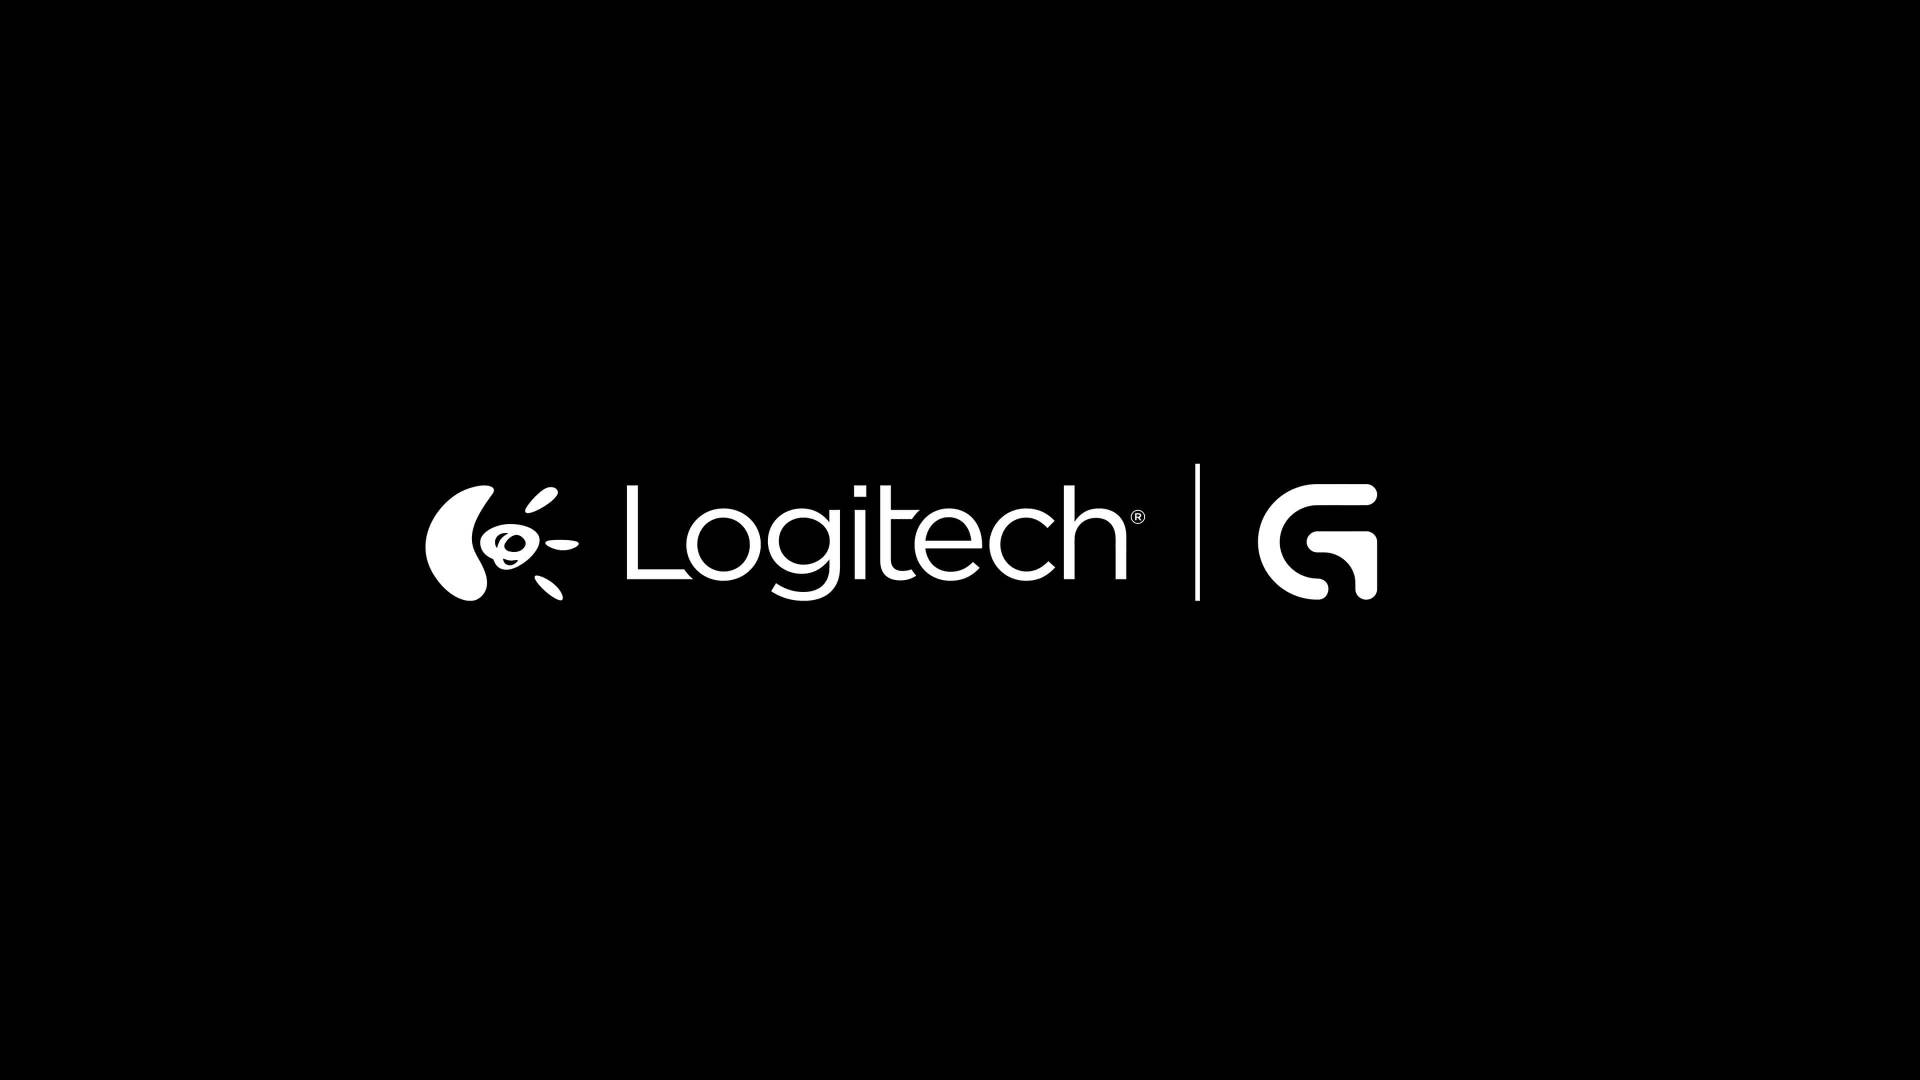 Official Logitech Logos Background